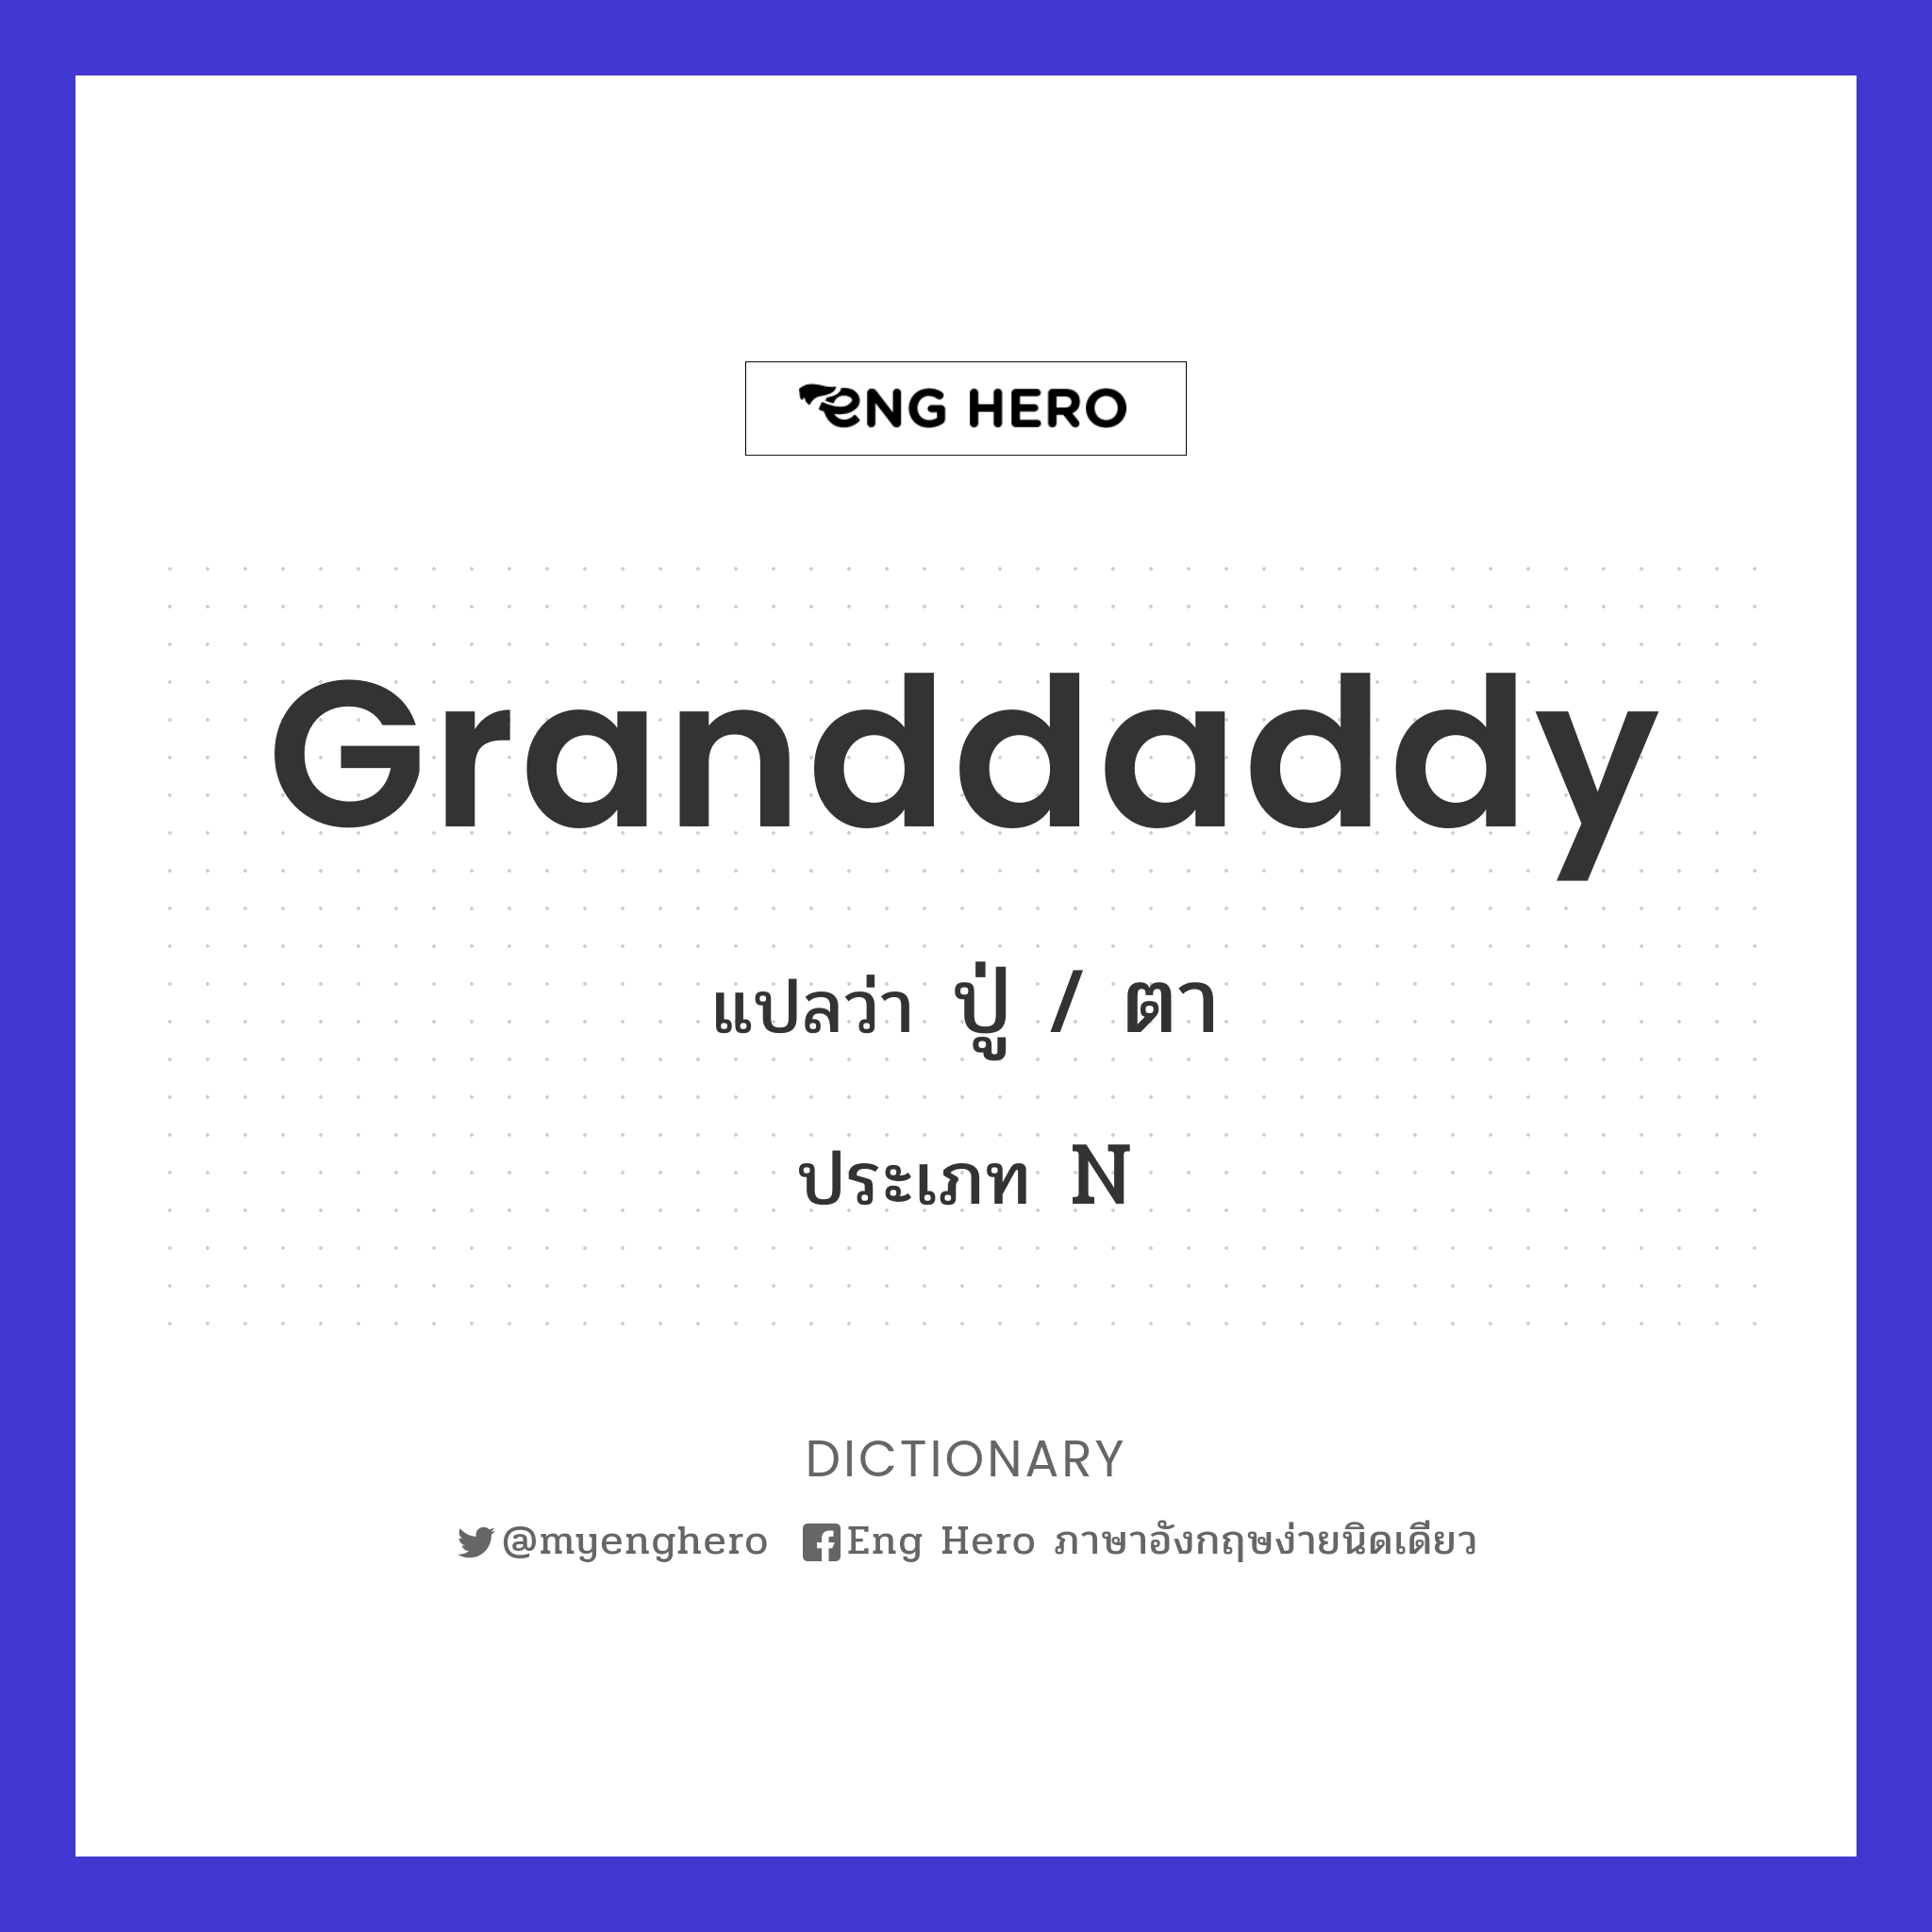 granddaddy